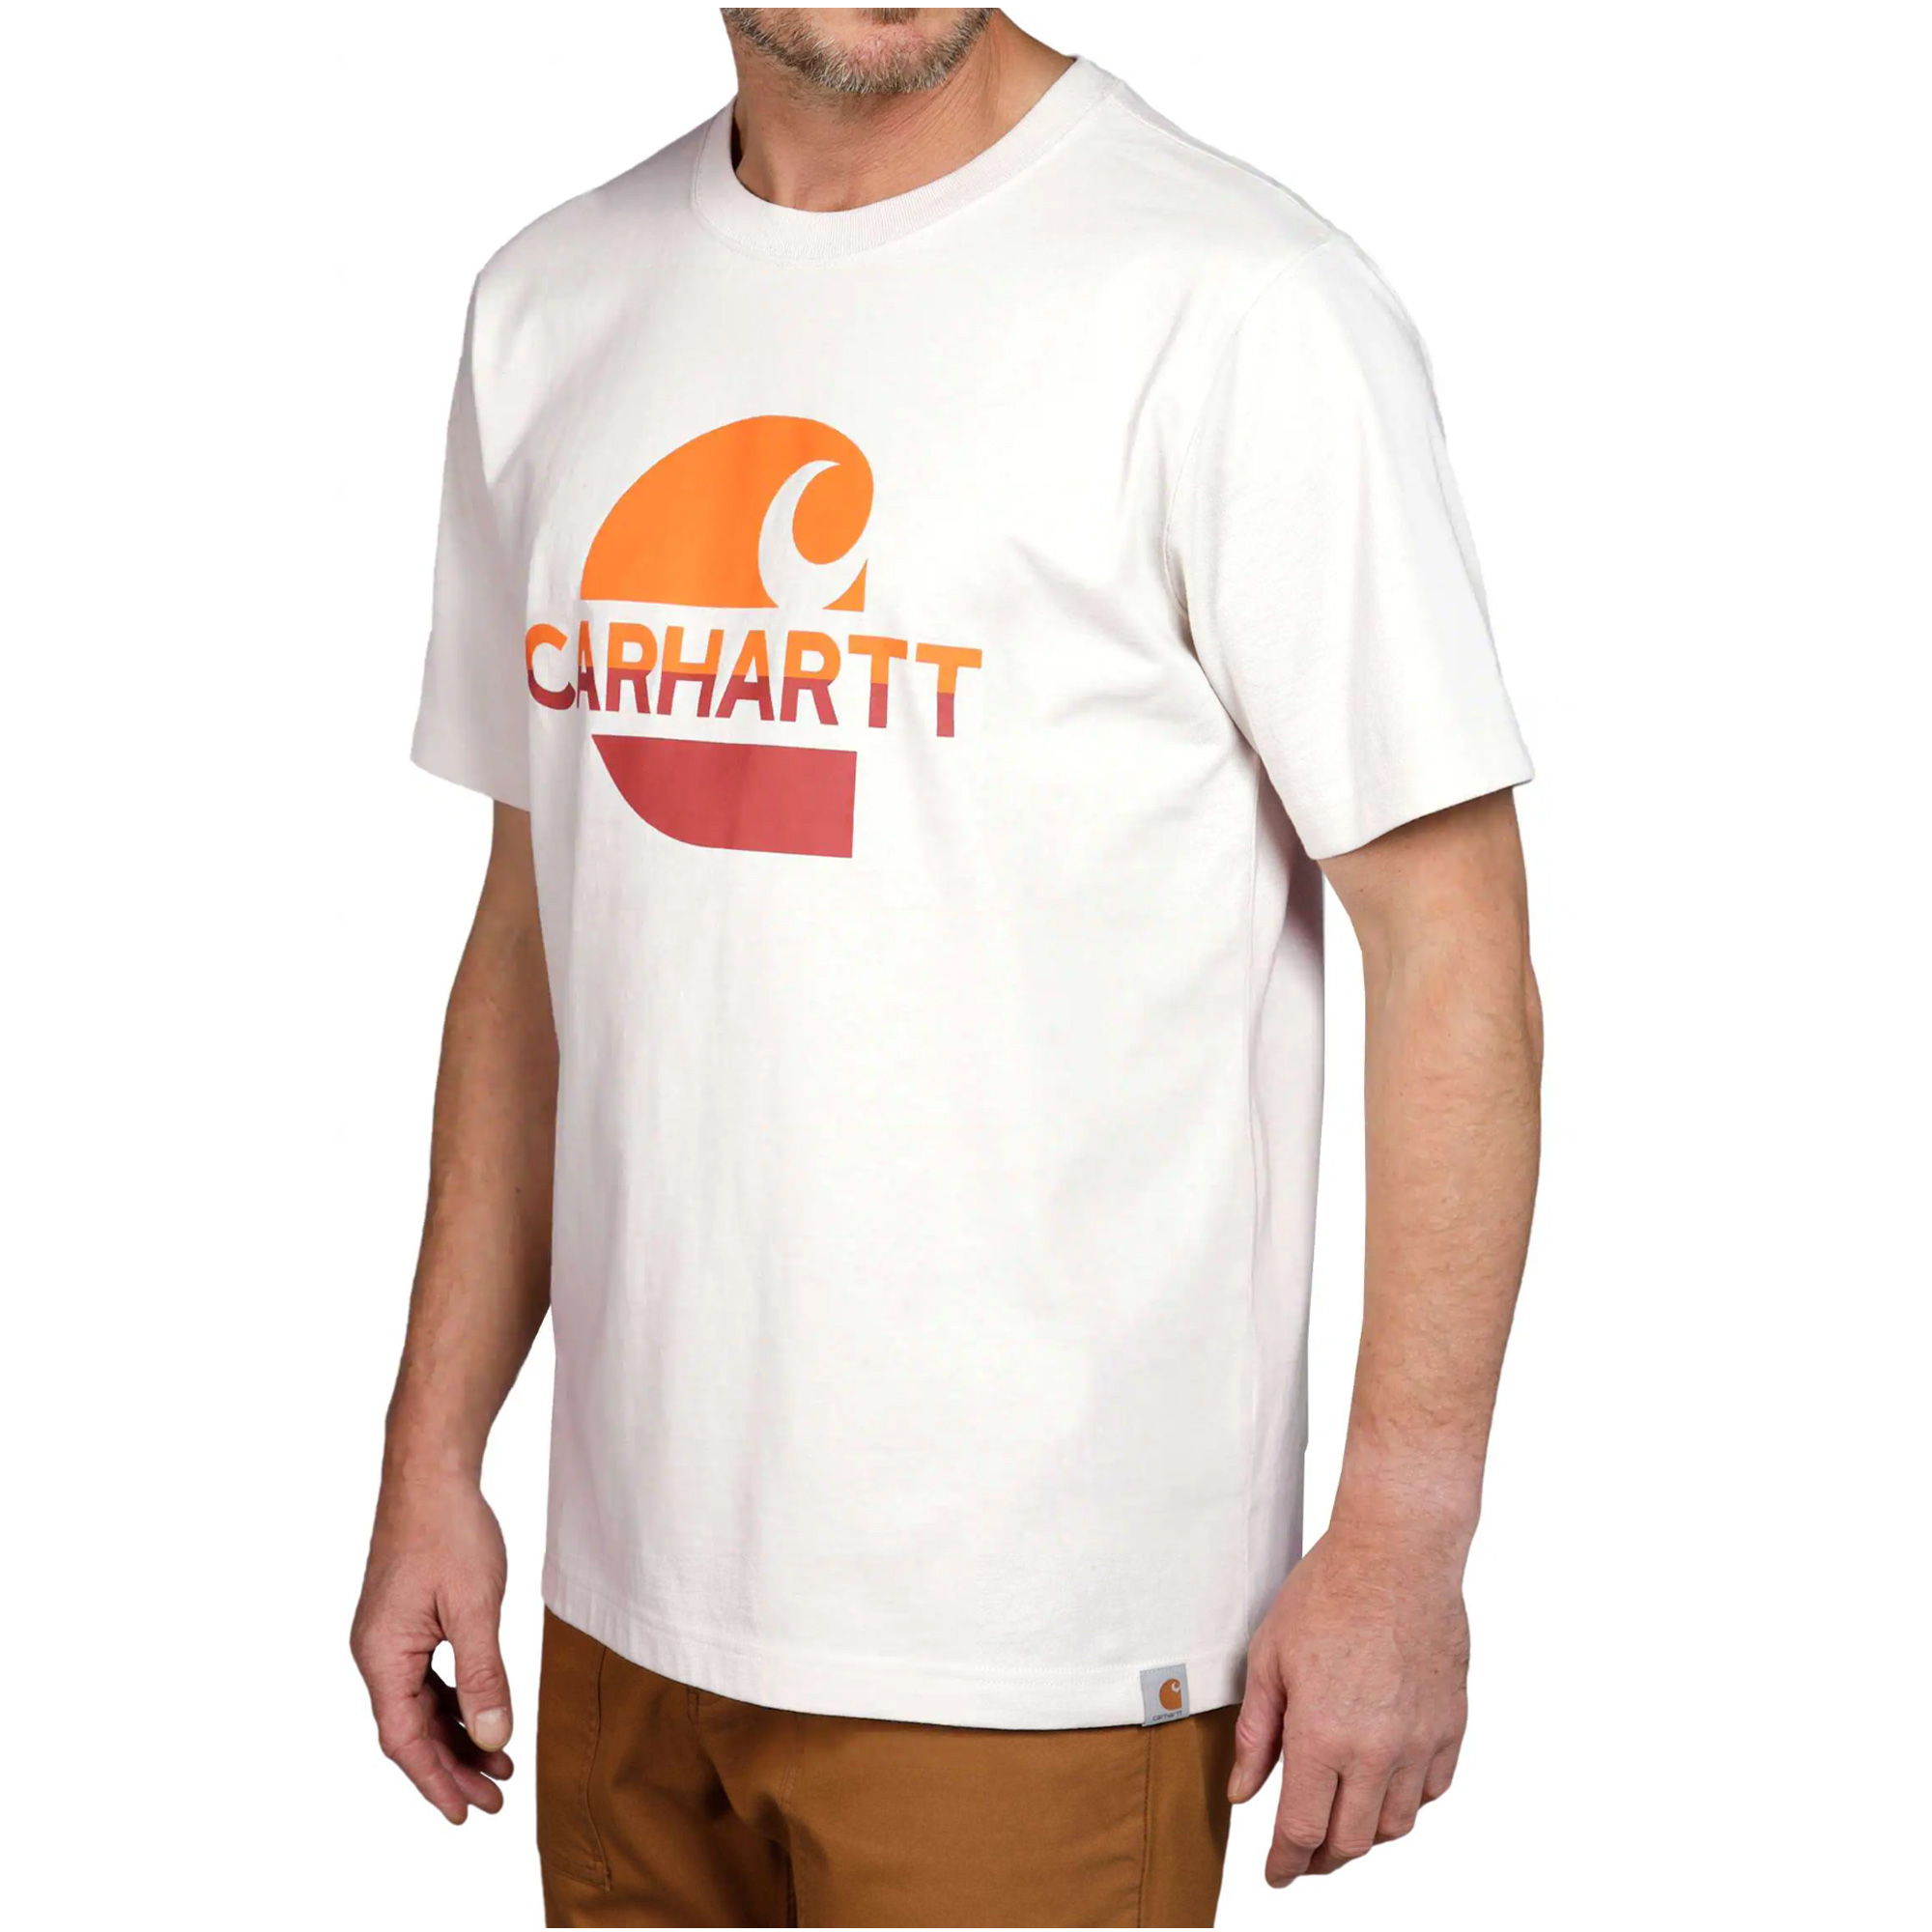 Carhartt Relaxed Fit Heavyweight S/S 'C' Graphic T-Shirt ecru